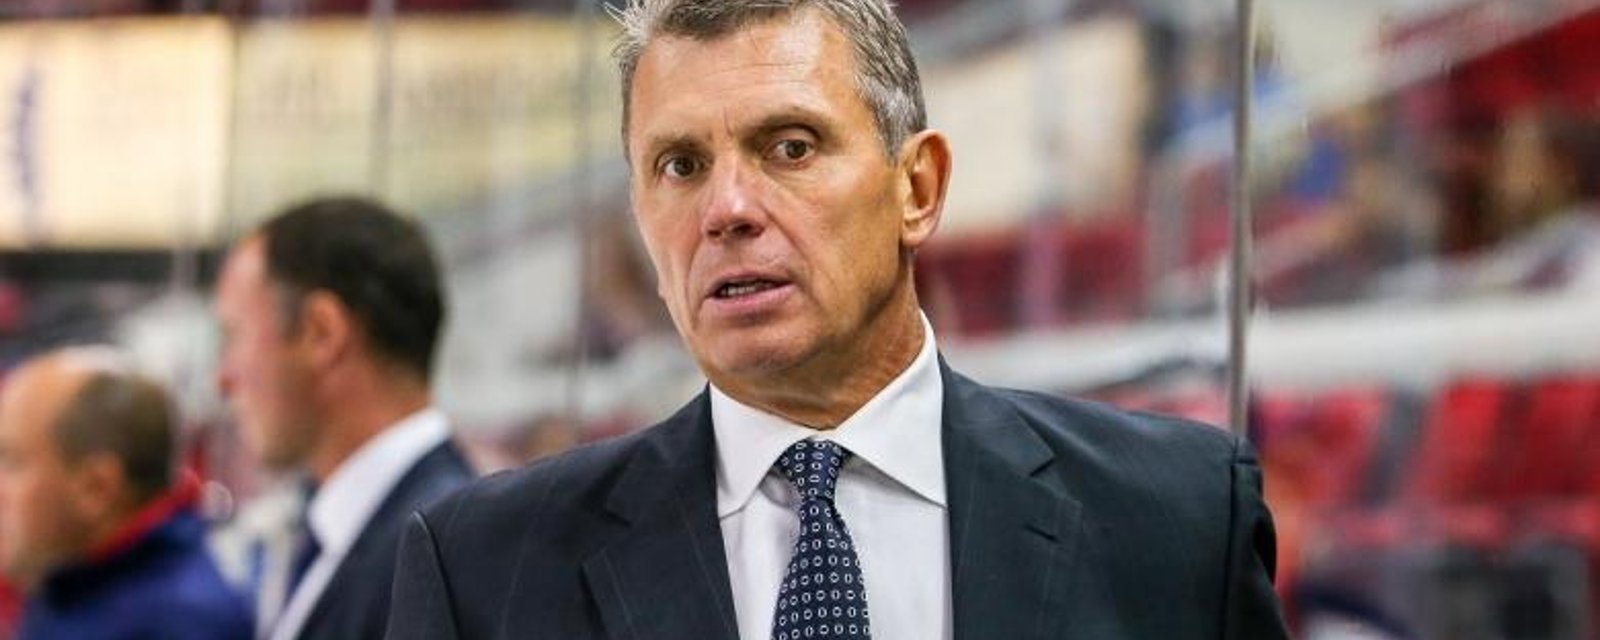 Longtime NHL coach officially announces his retirement.